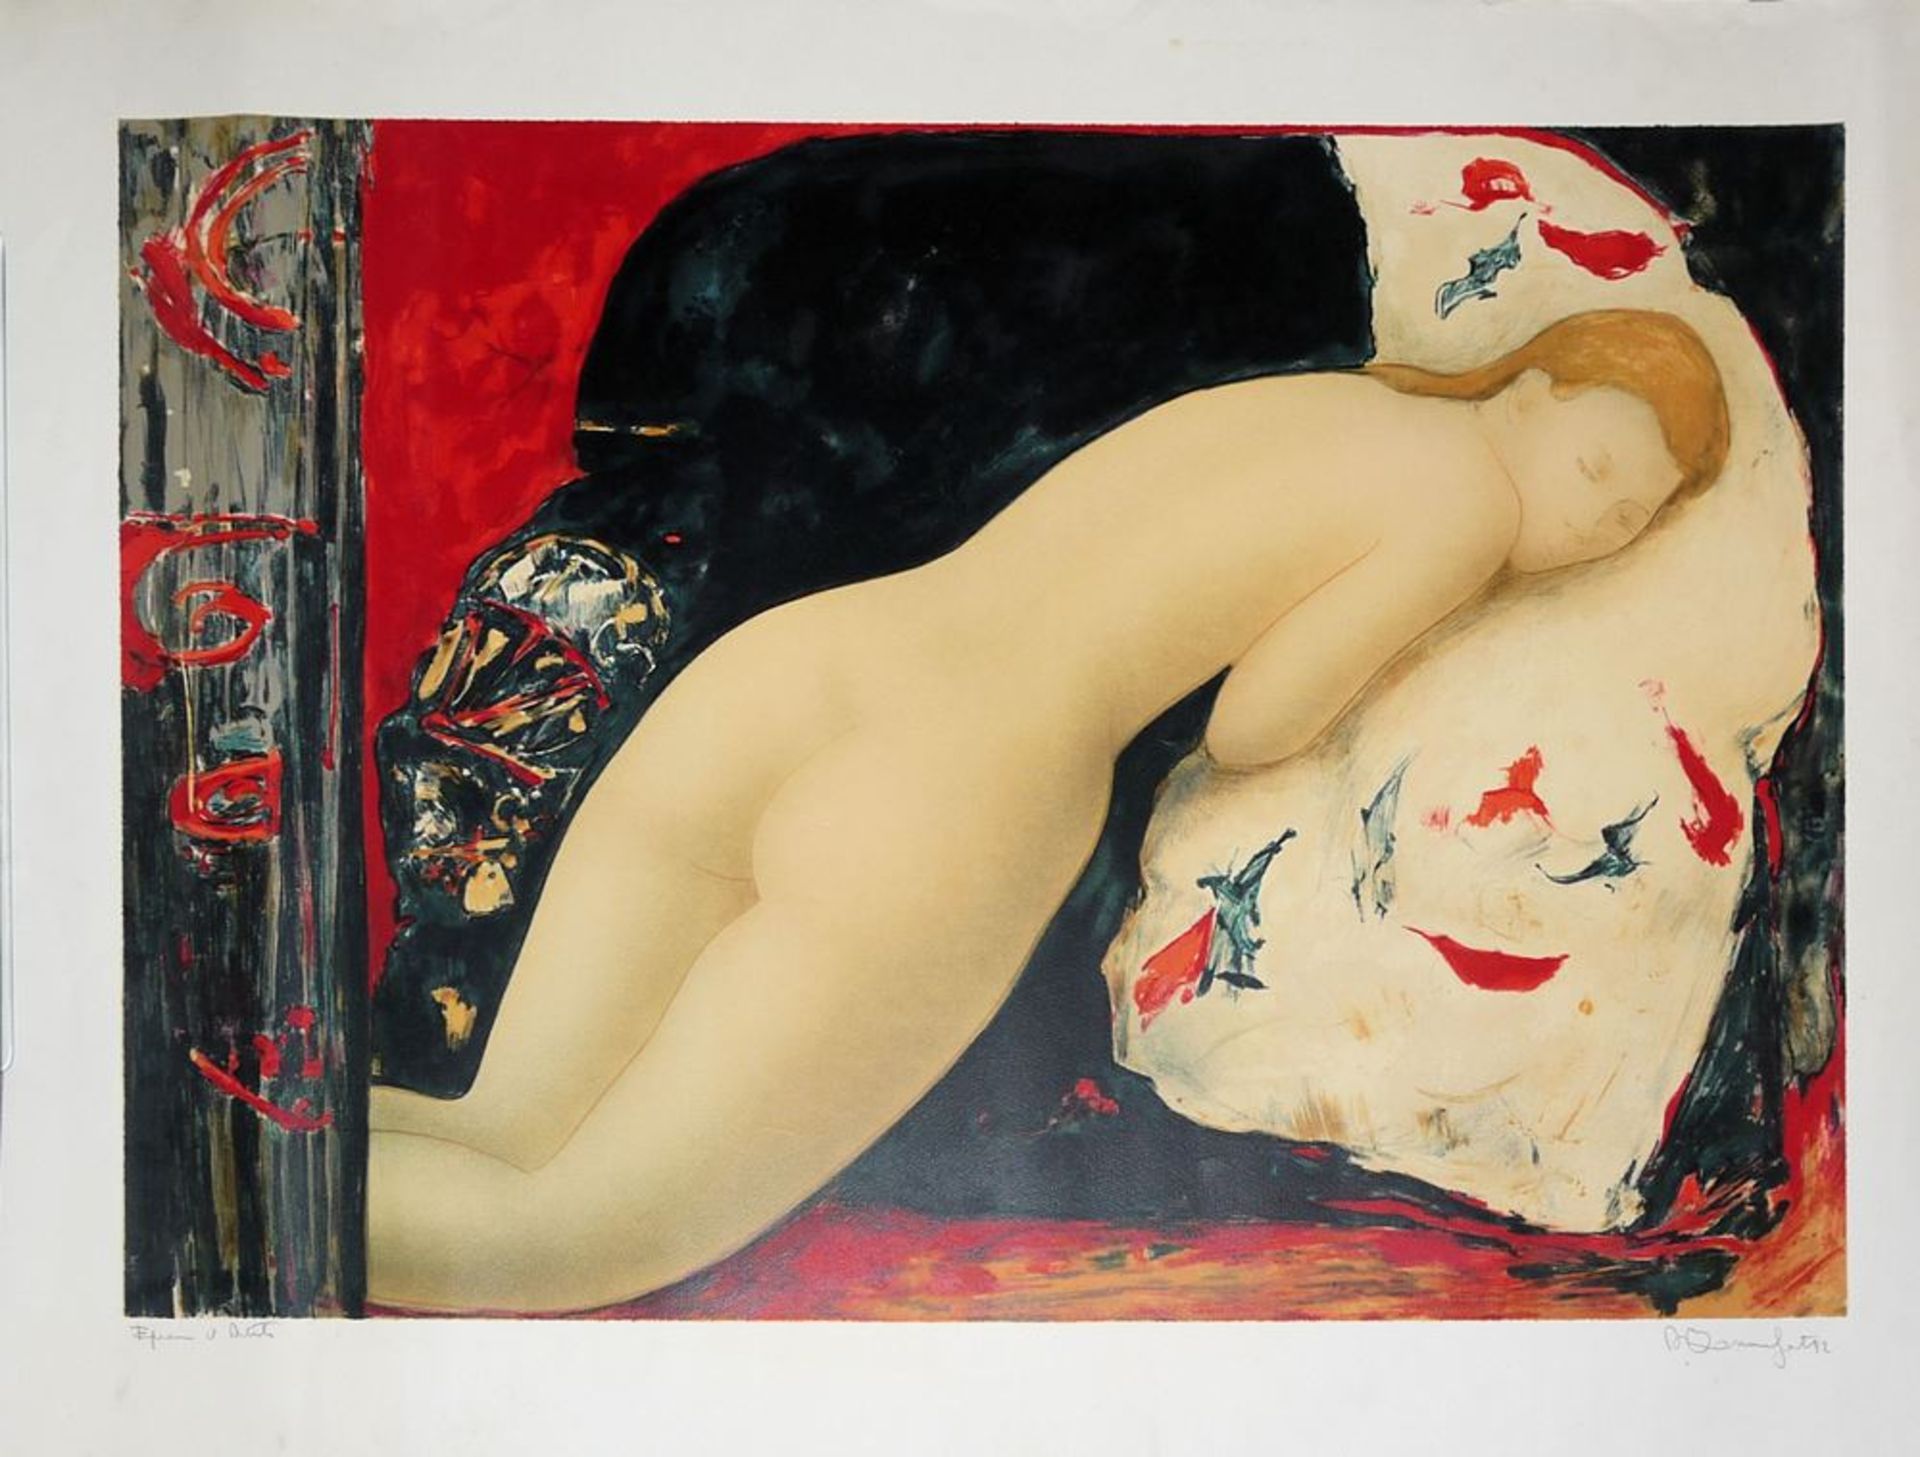 Alain Bonnefoit, Sleeping Nude, large colour lithograph, signed